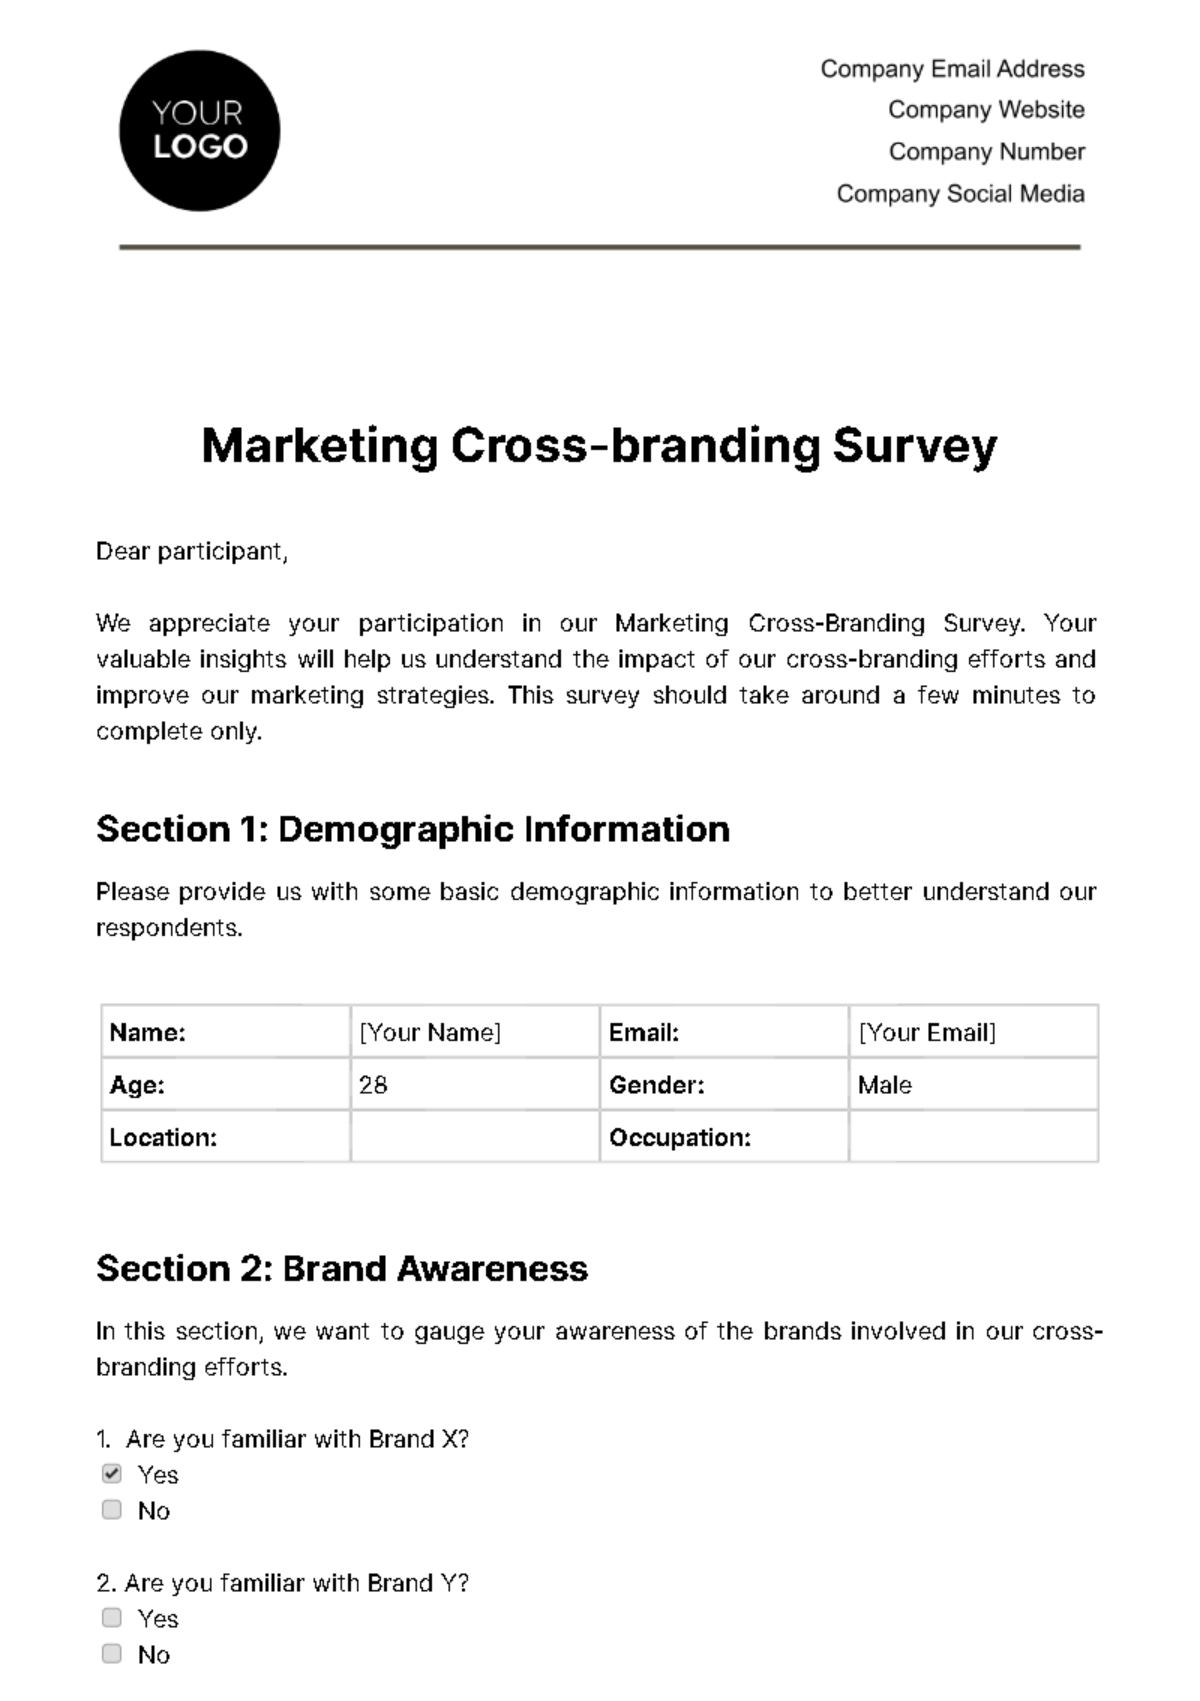 Marketing Cross-branding Survey Template